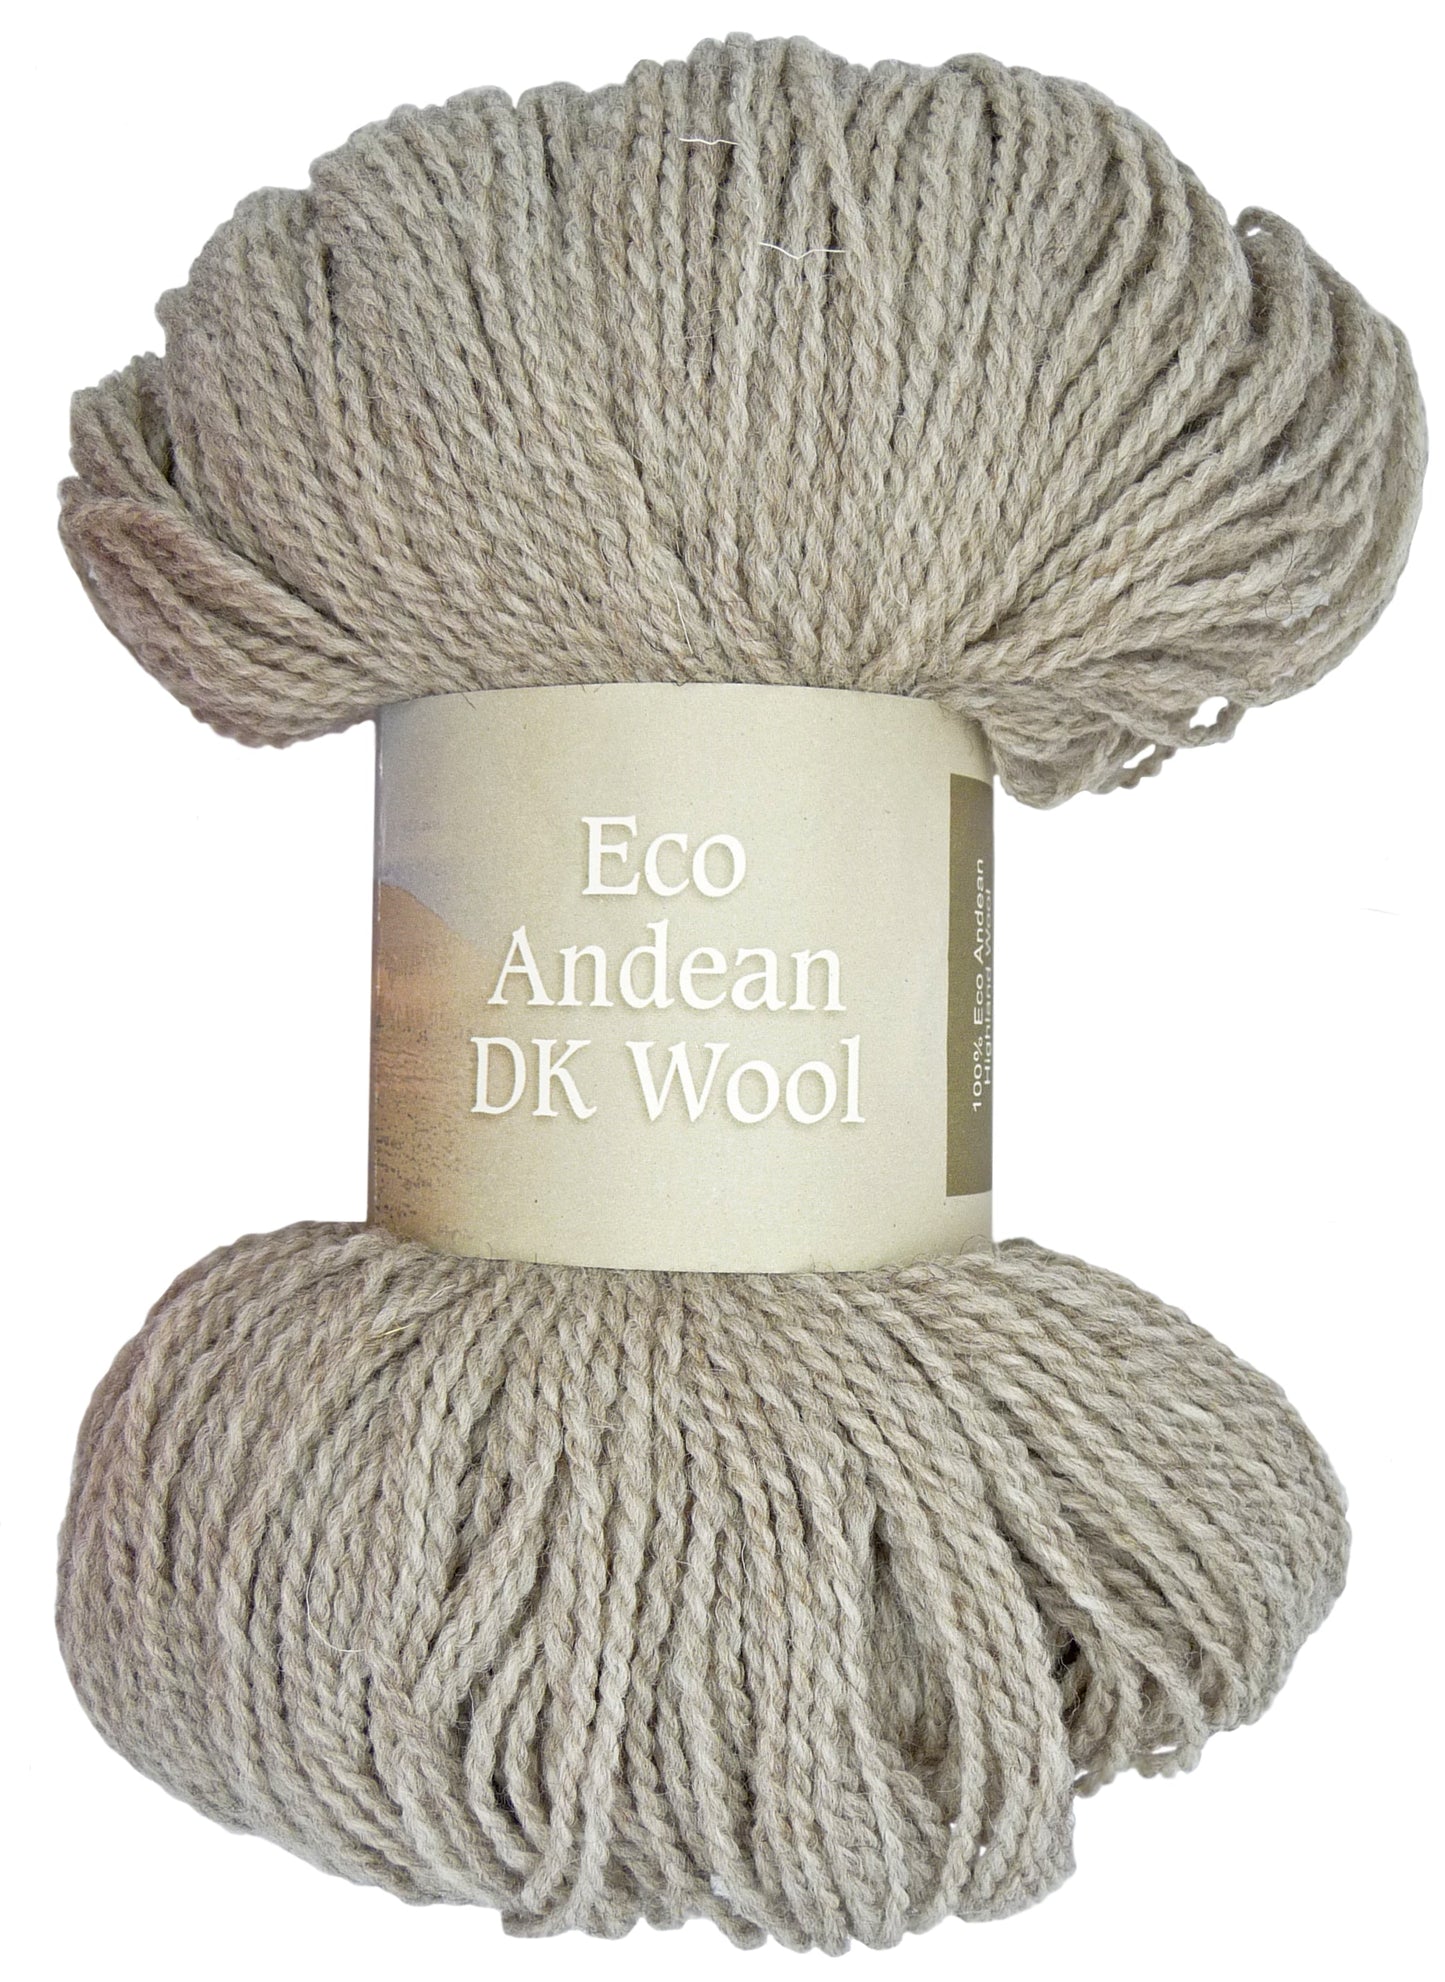 Estelle Eco Andean DK Alternate dye lots